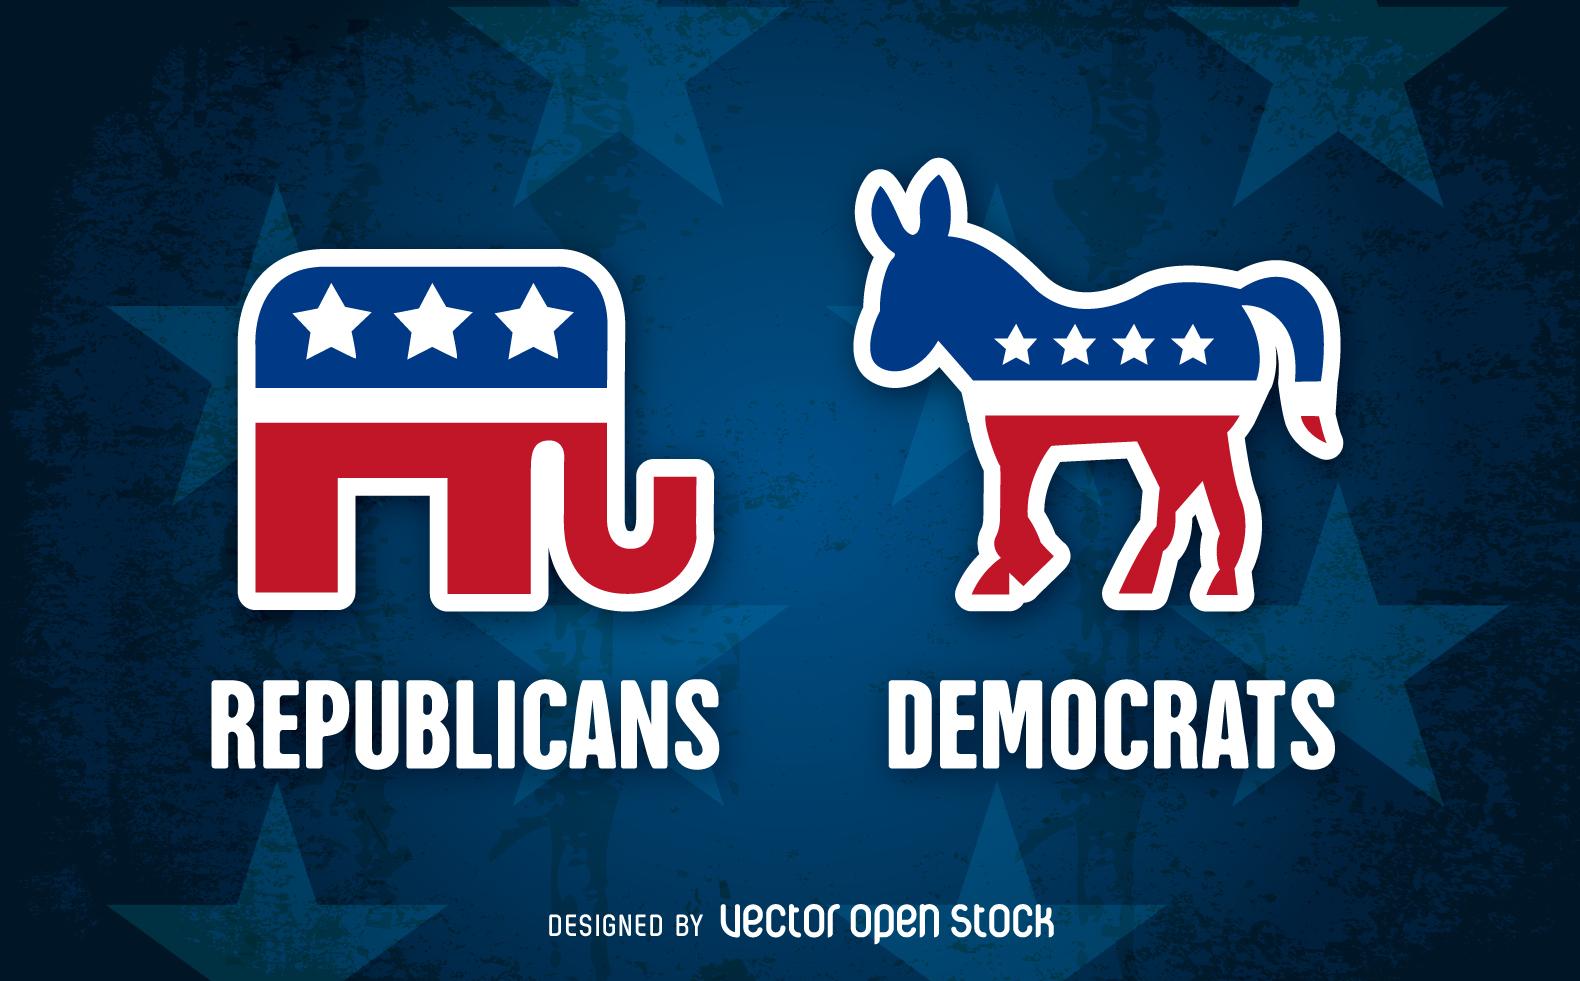 Free download Republican and Democrat party symbols Vector